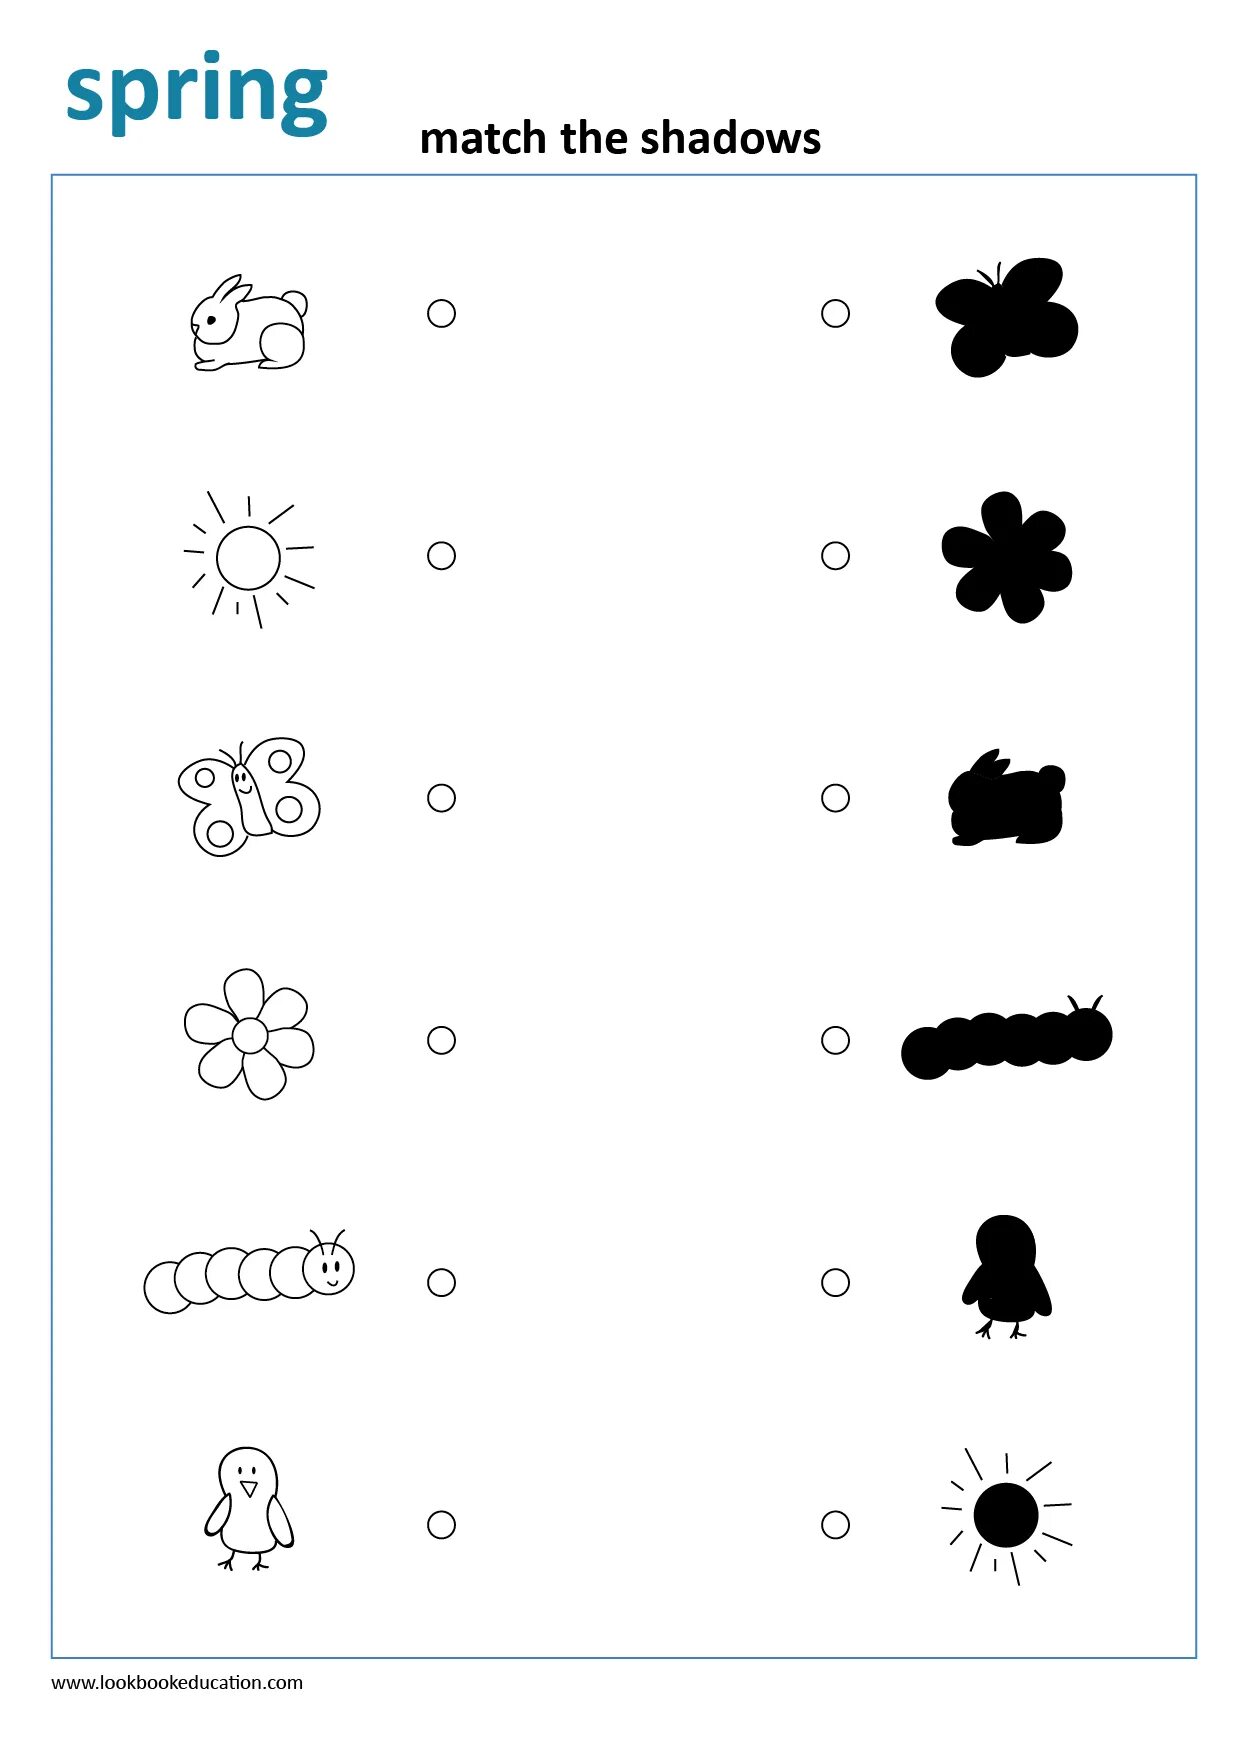 Shadow Worksheet. Shadows for Kids Worksheets. Light and Shadow Worksheet for Kids. Spring match